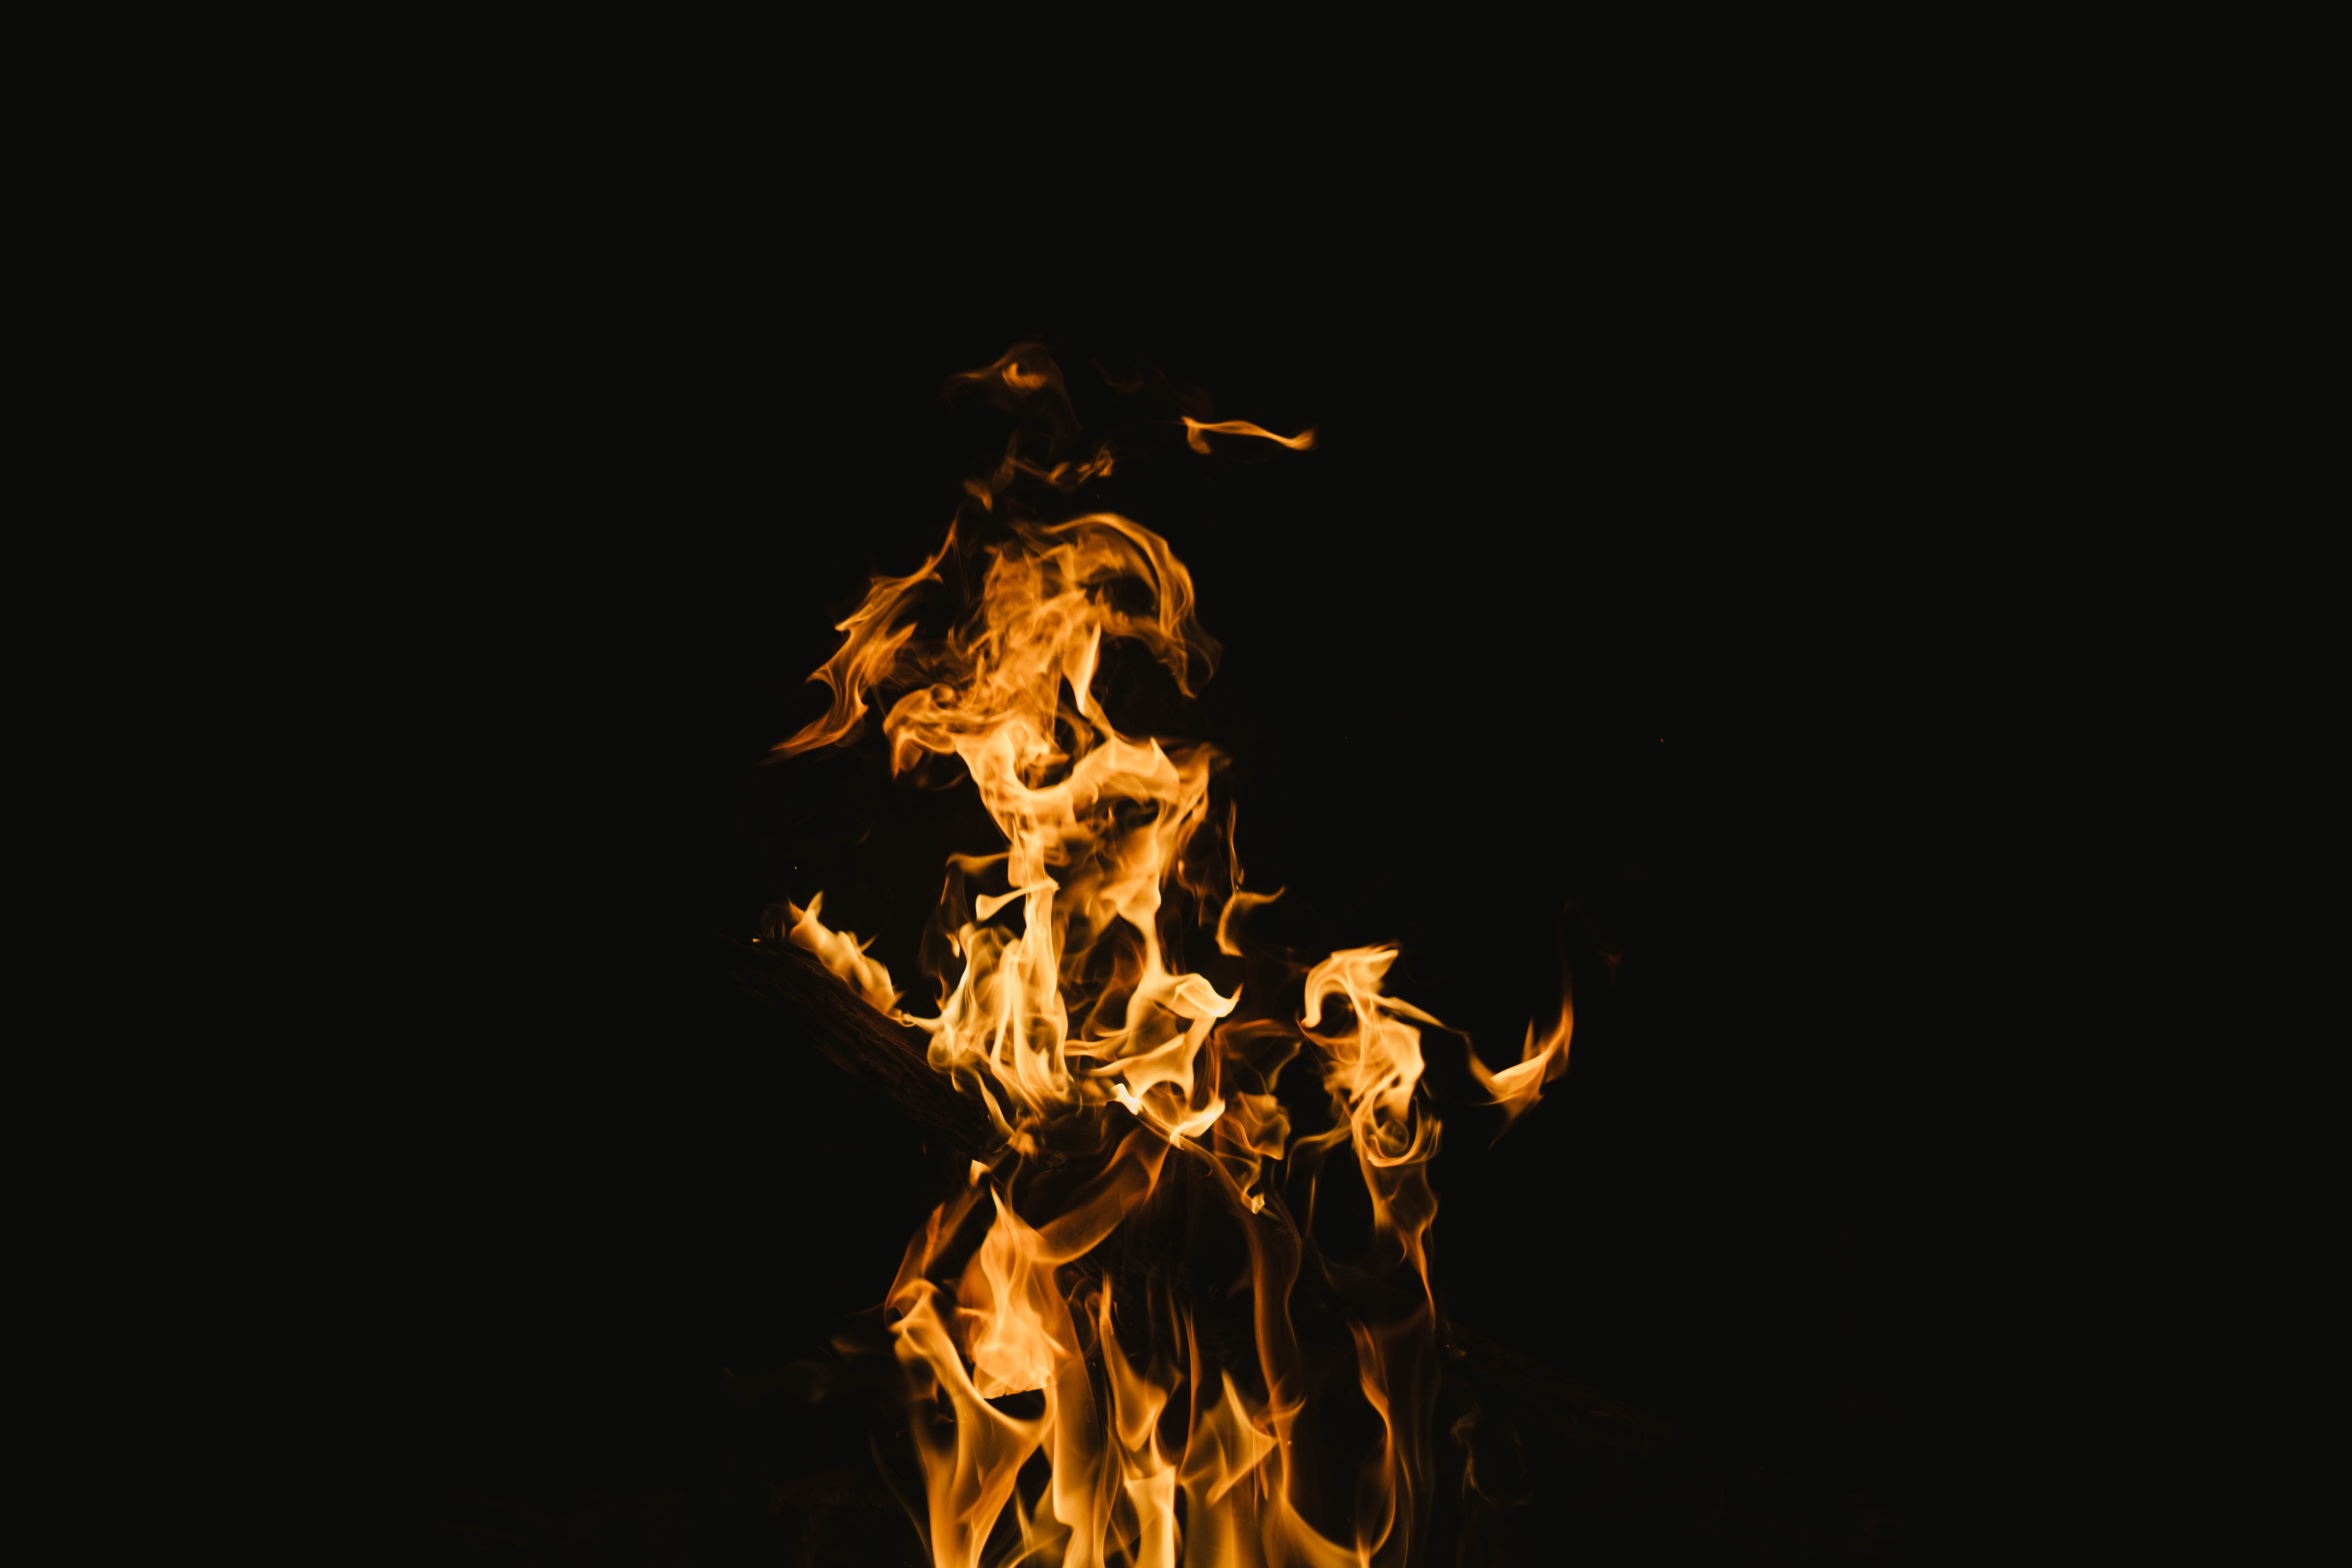 Phone Wallpaper (No watermarks) to burn, burn, fire, blazing